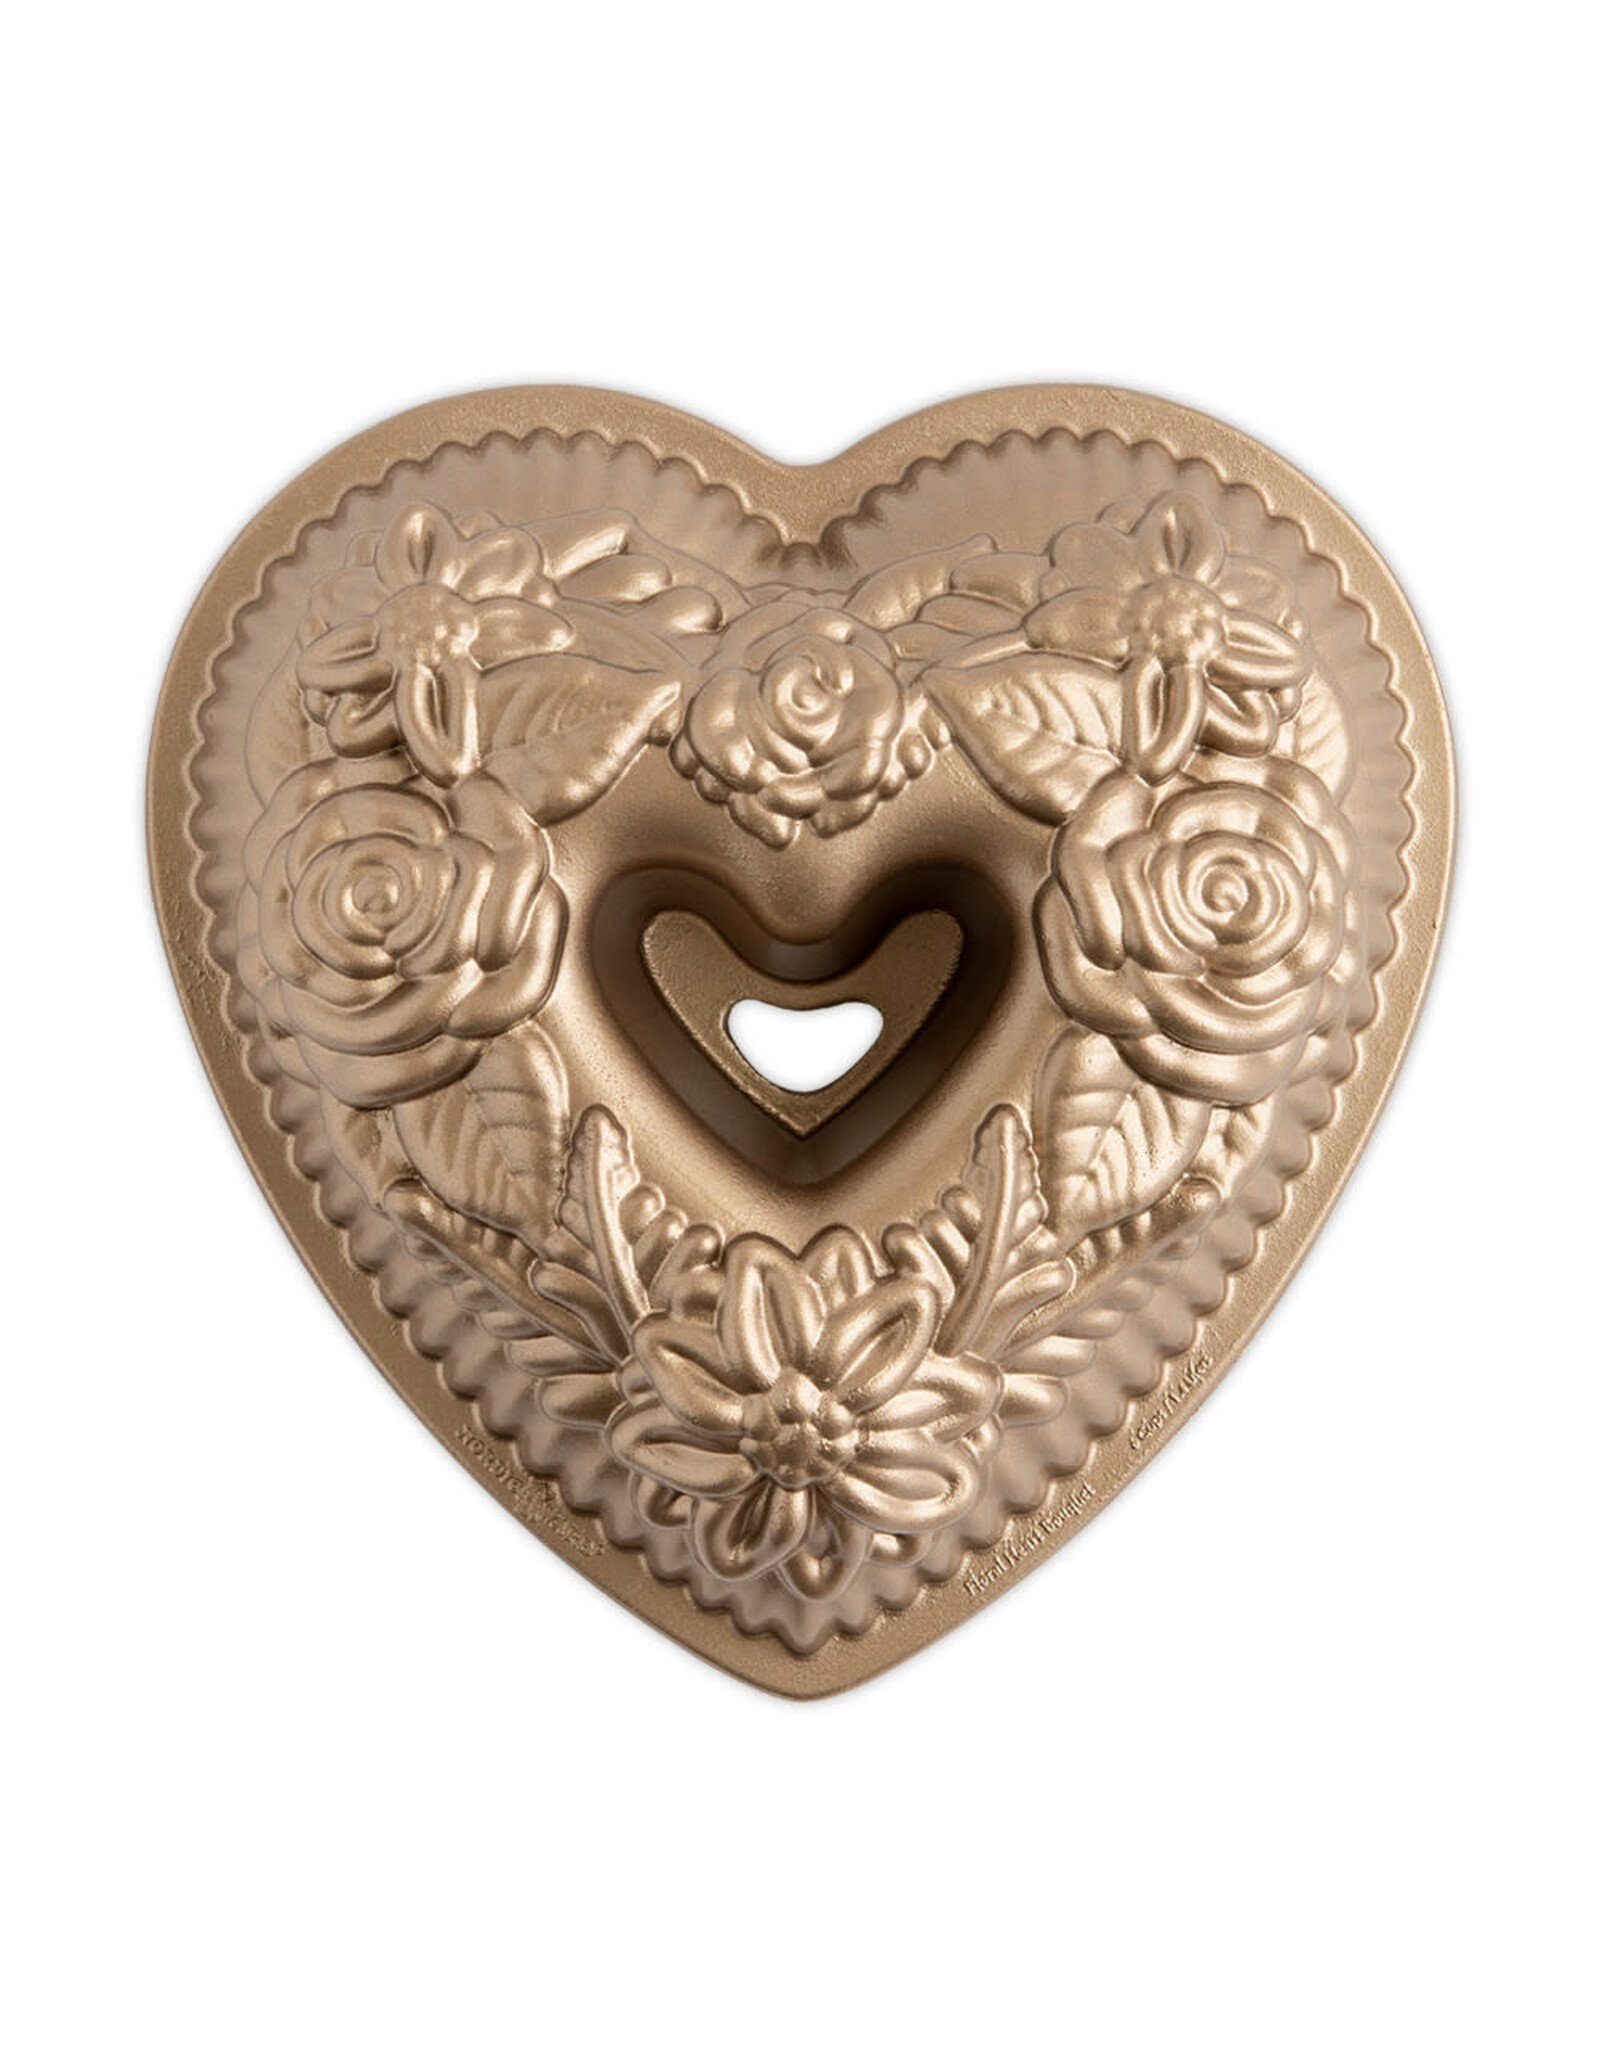 Nordic Ware Floral Heart Bundt Pan